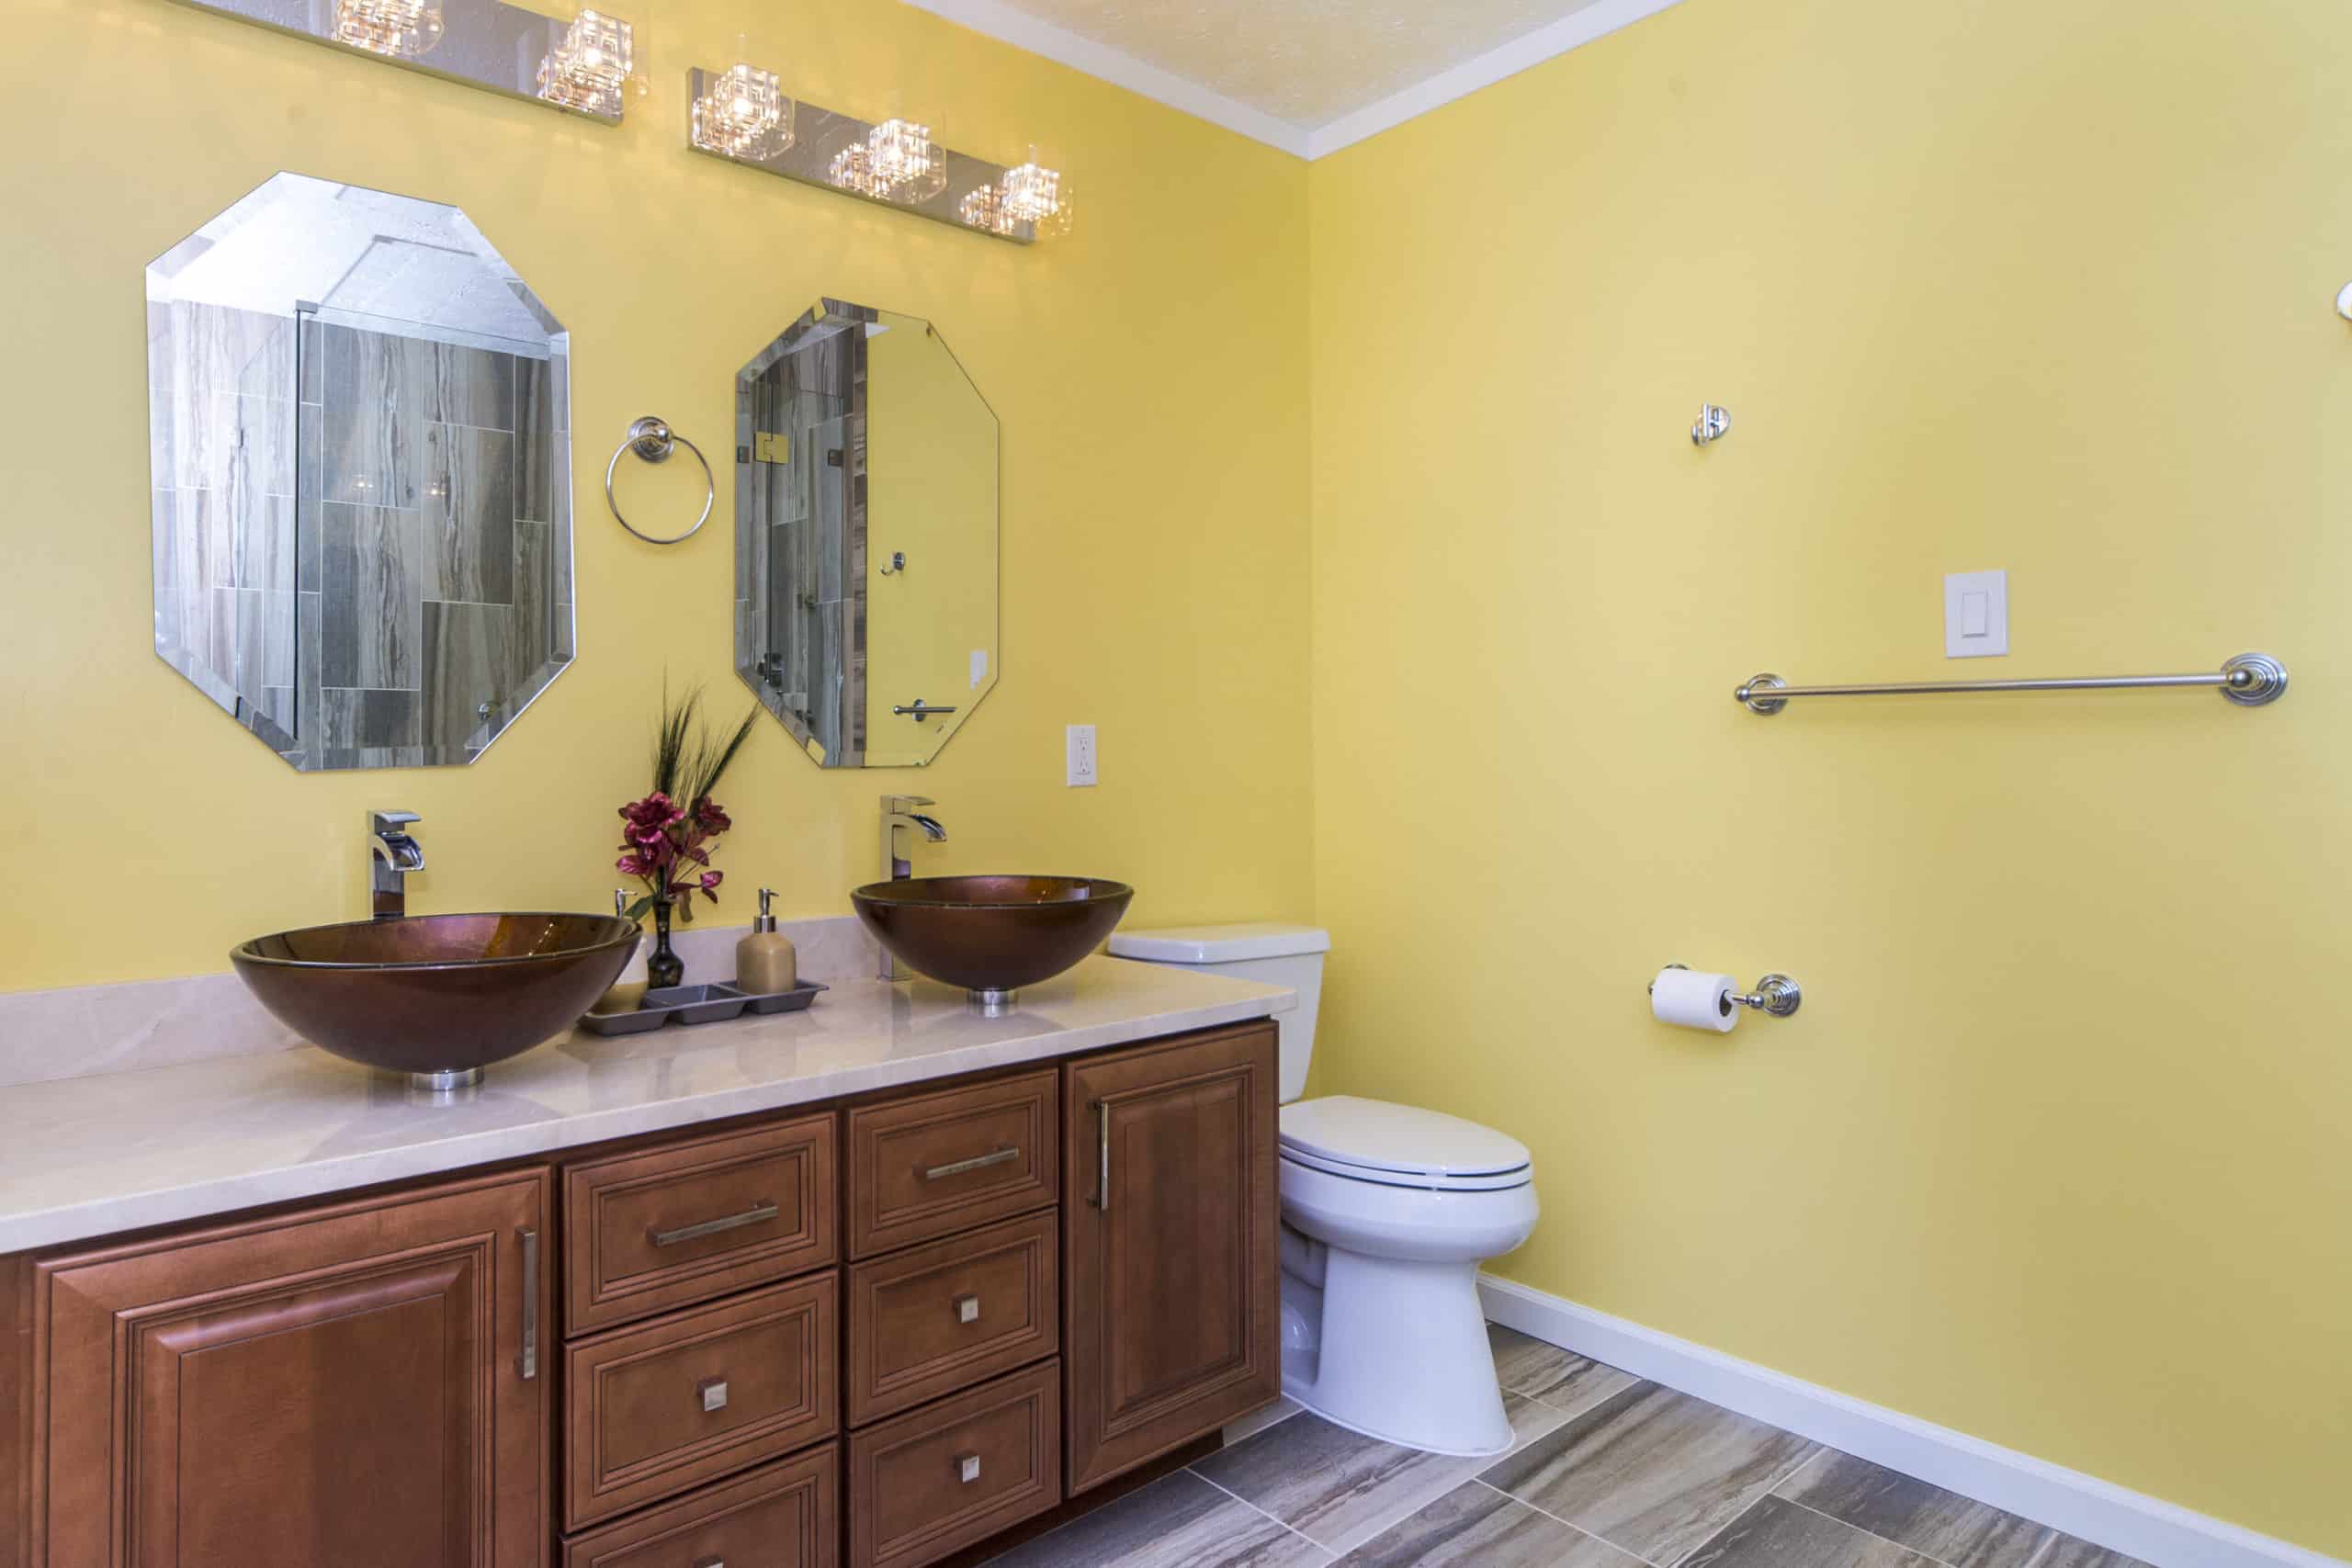 Spacious bathroom with wood colored flooring, and brown vanity